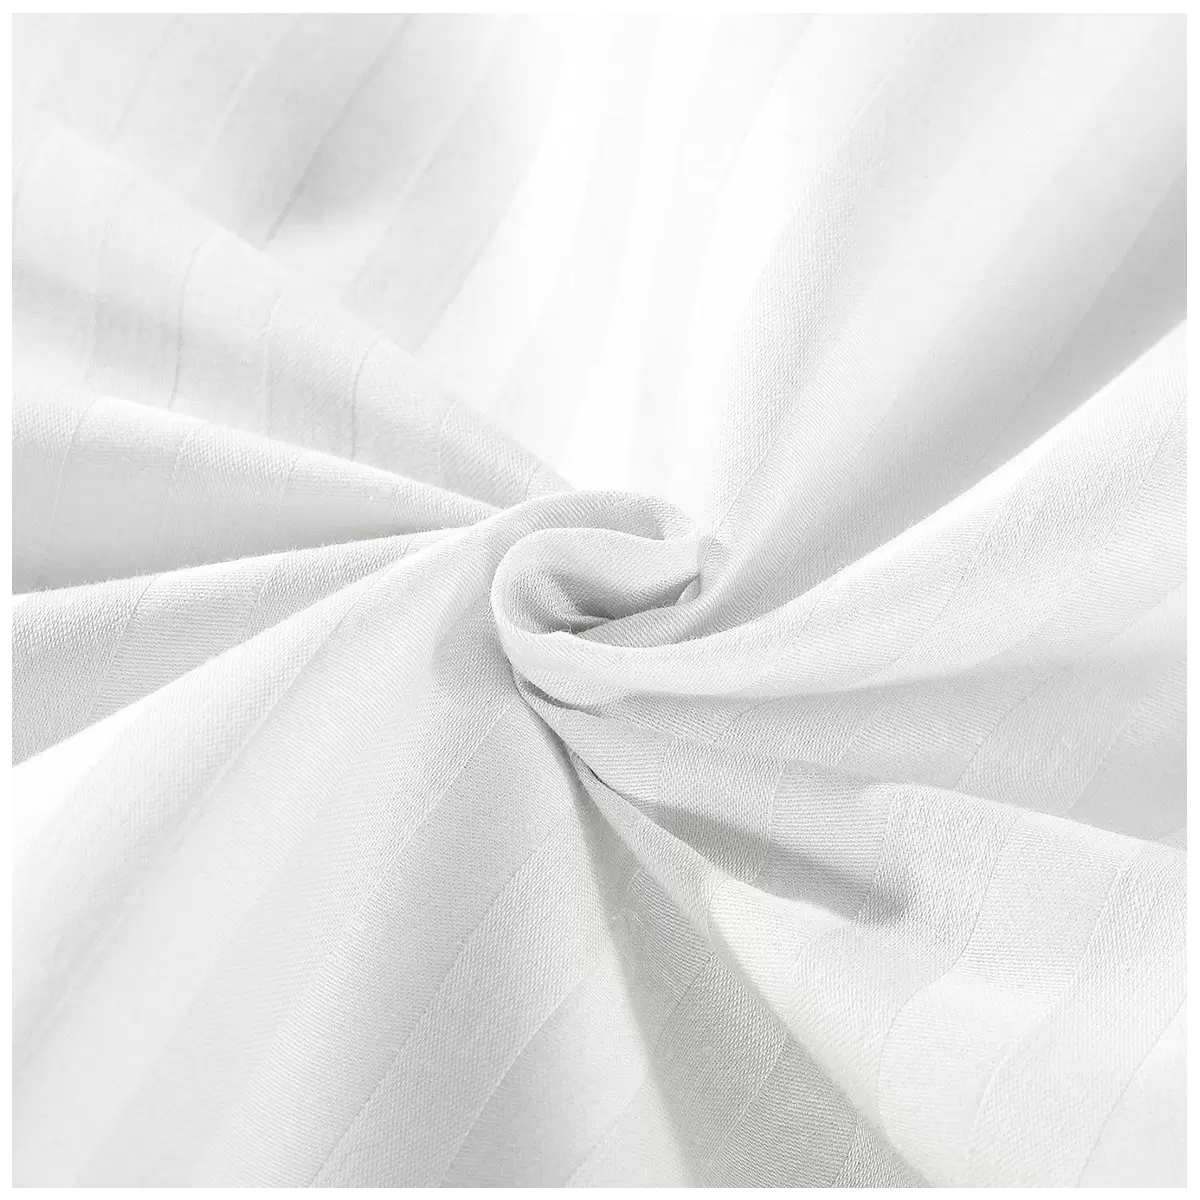 Sheet Set Stripes Queen - White